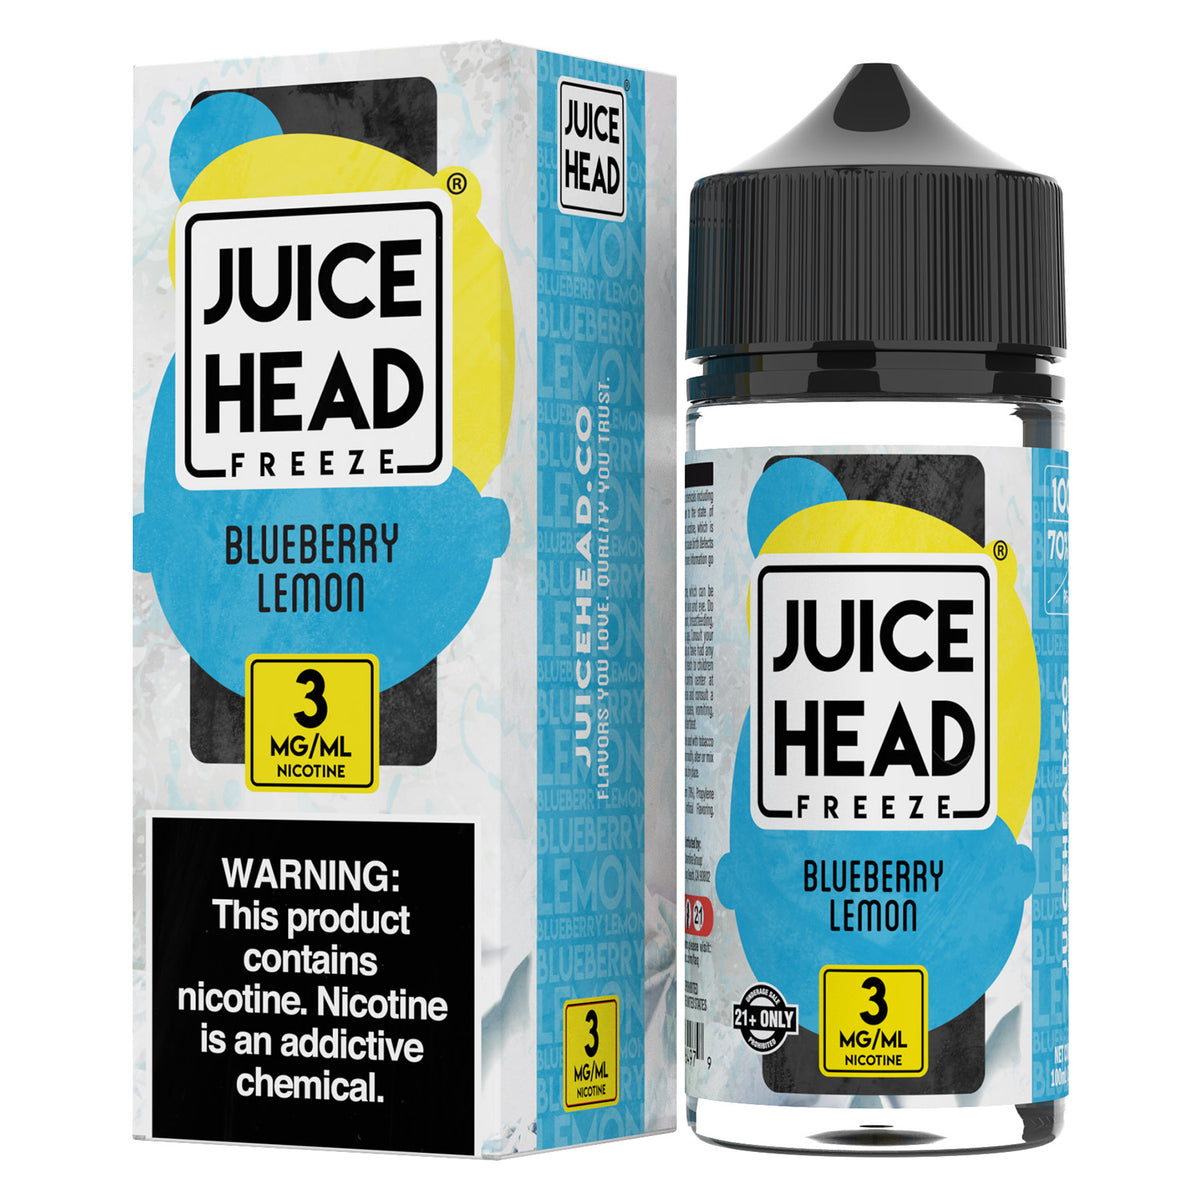 Juice Head 100mL Blueberry Lemon Freeze